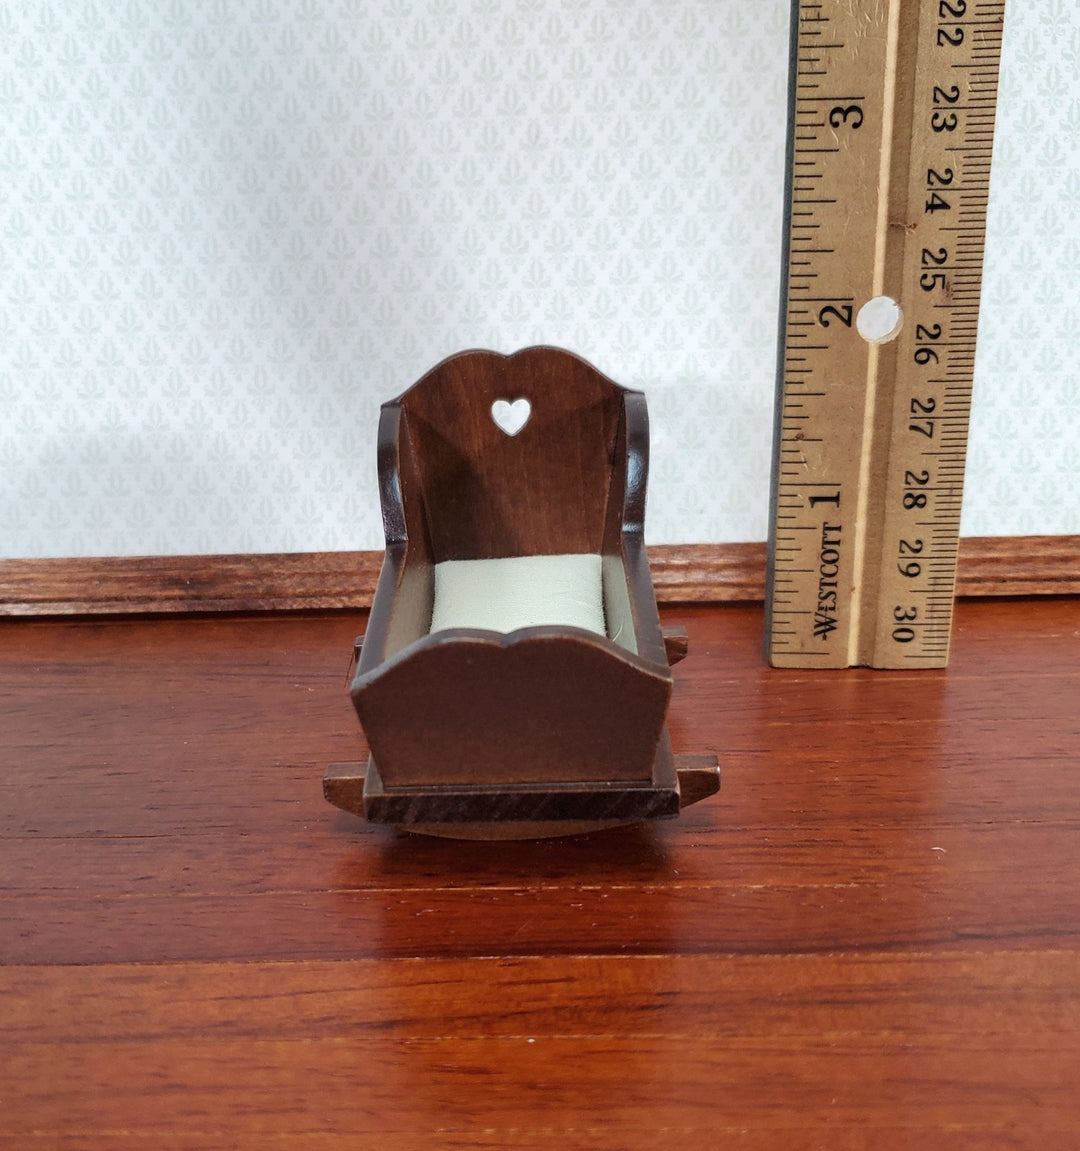 Dollhouse Cradle Small Crib for Nursery Walnut Finish 1:12 Scale Miniature Furniture - Miniature Crush